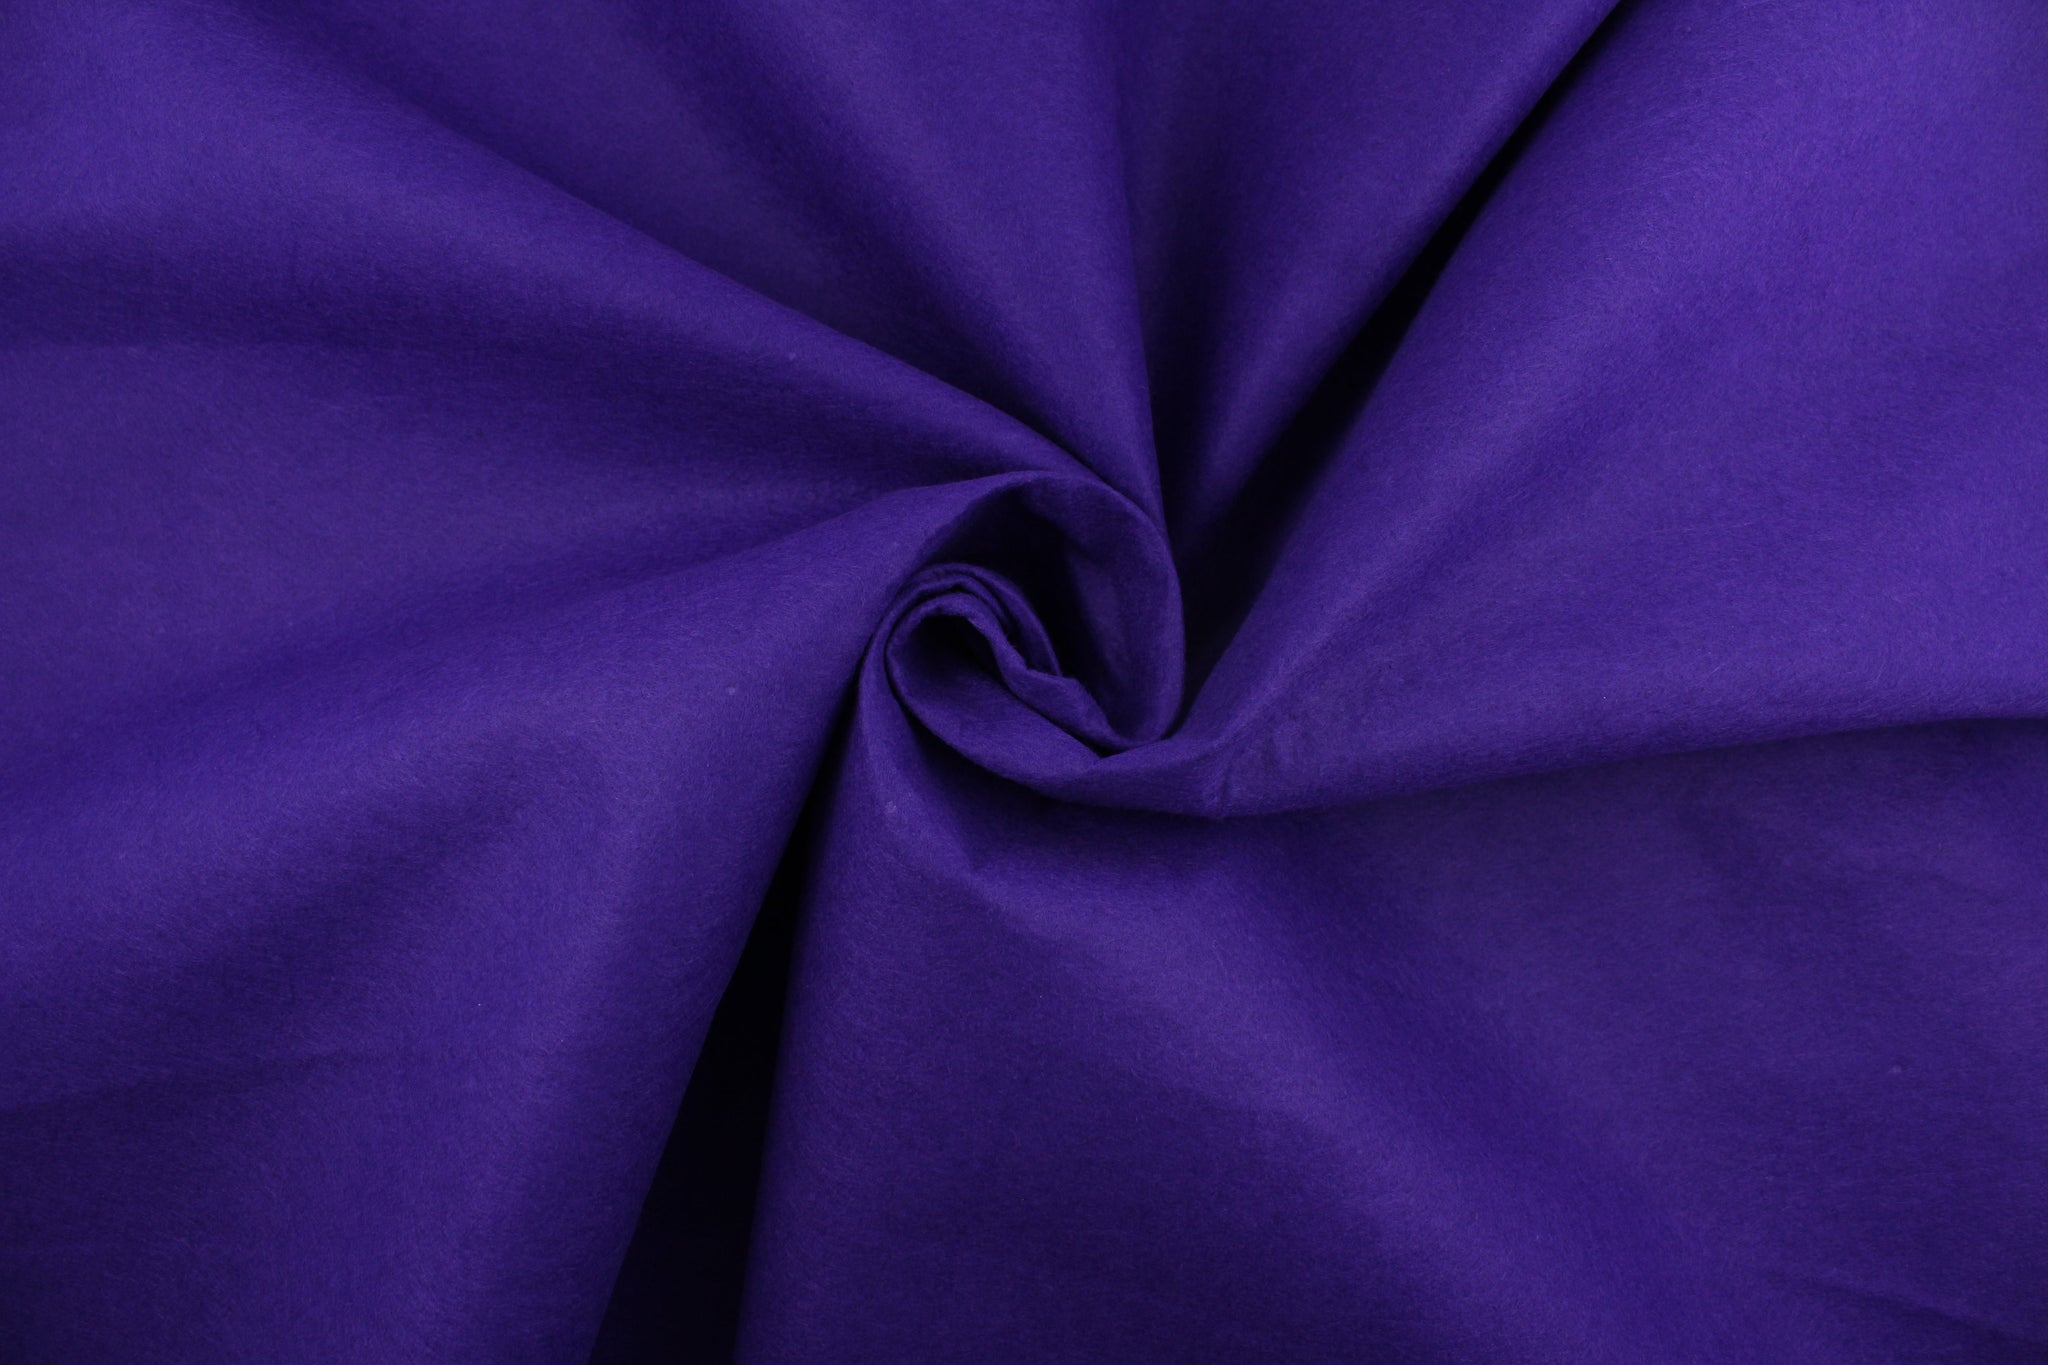  Bright Lilac Felt Fabric - by The Yard : Arts, Crafts & Sewing